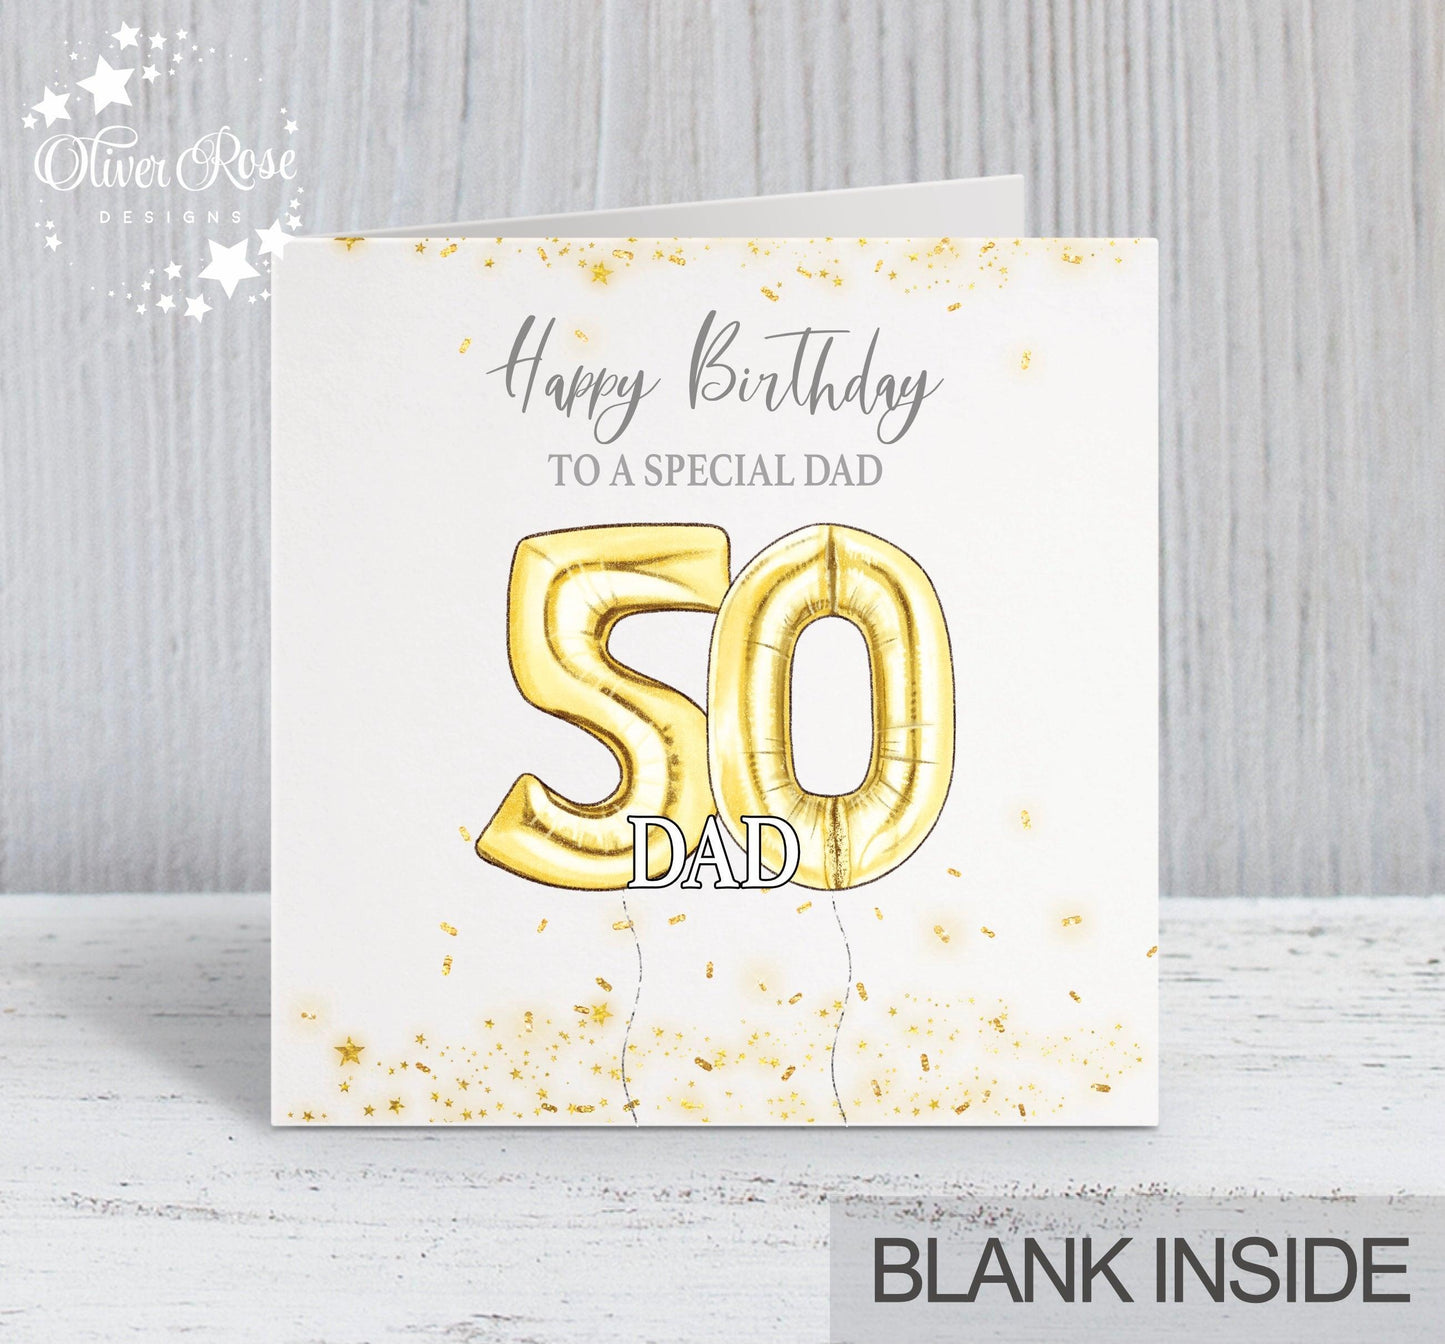 AGE(GOLD) Birthday Card, 50th Birthday Card, Printed Gold Effect, Dad